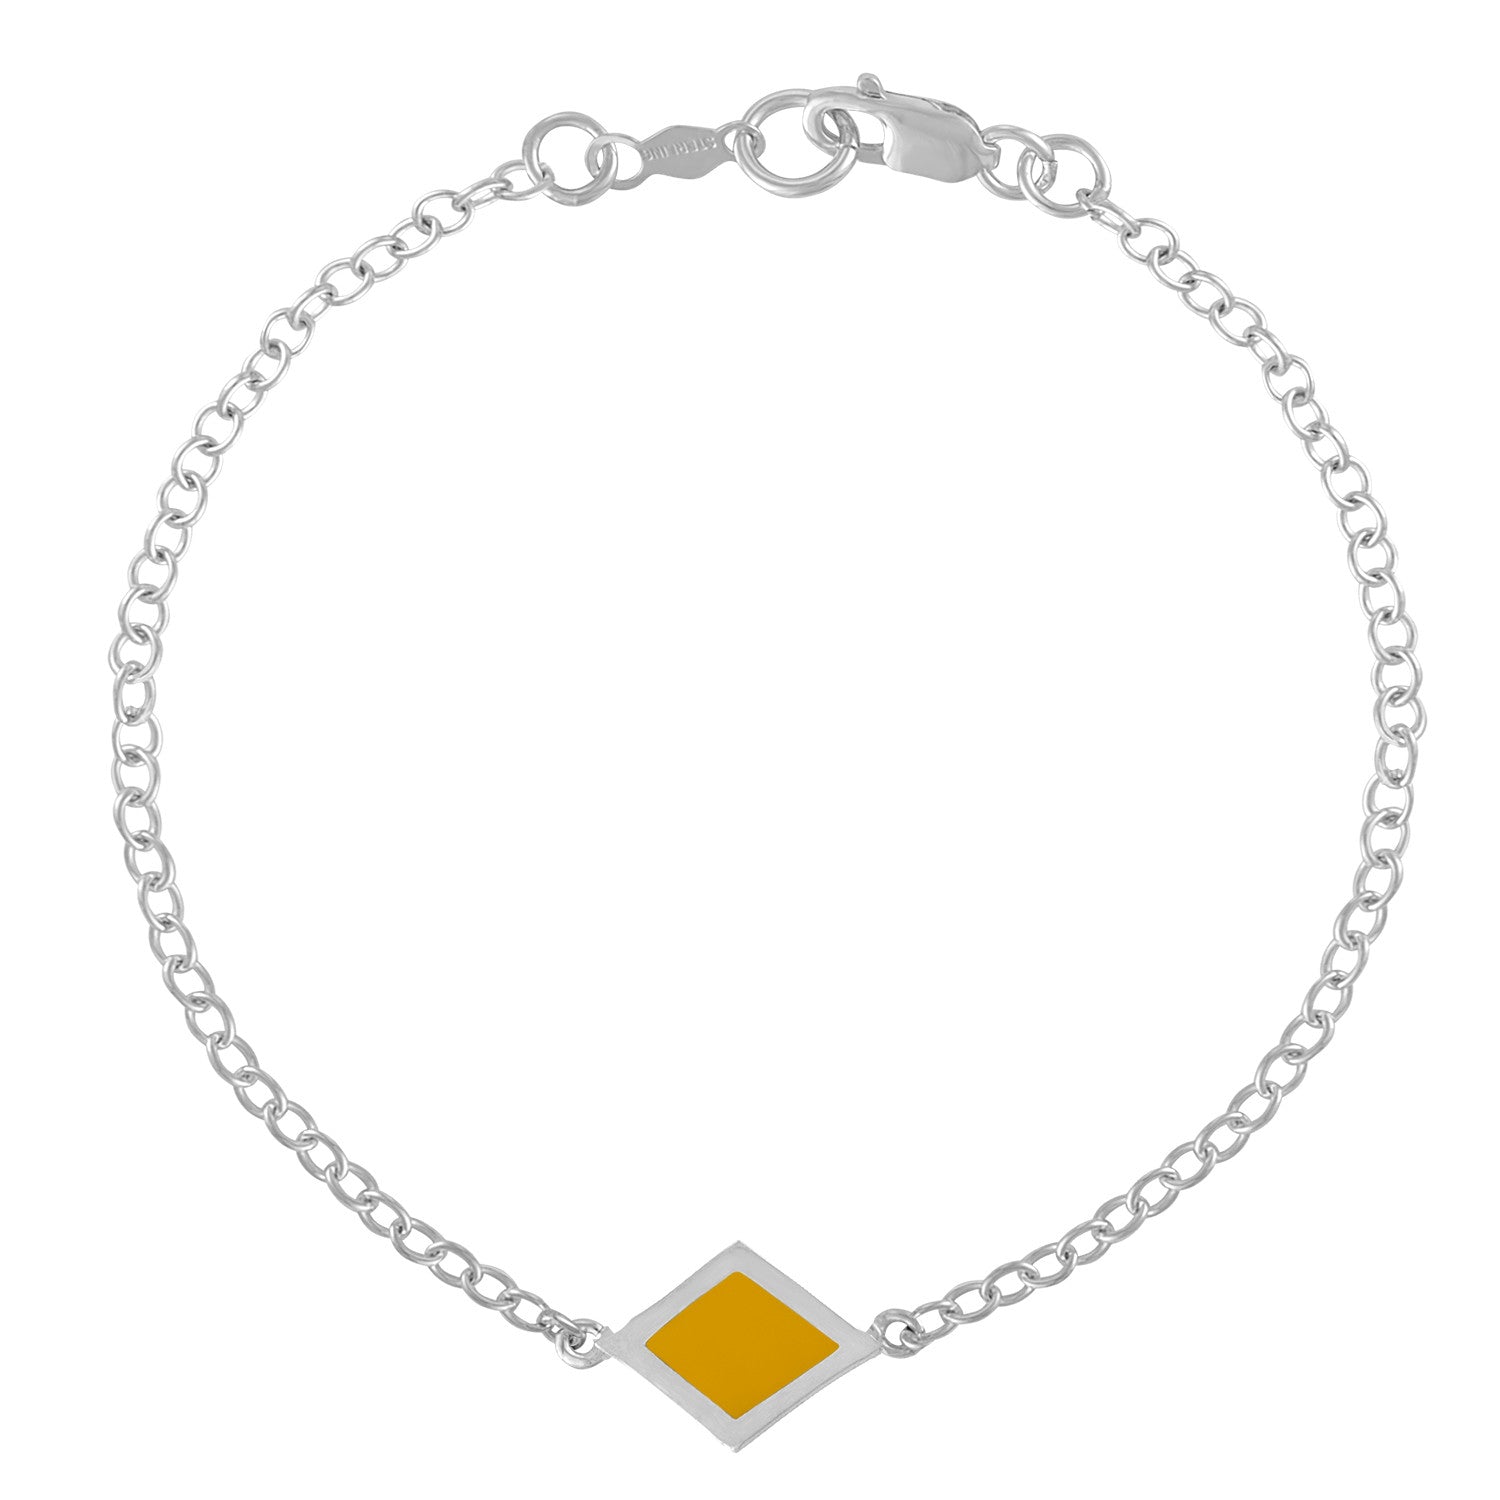 yellow enameled diamond shaped charm on delicate silver chain bracelet